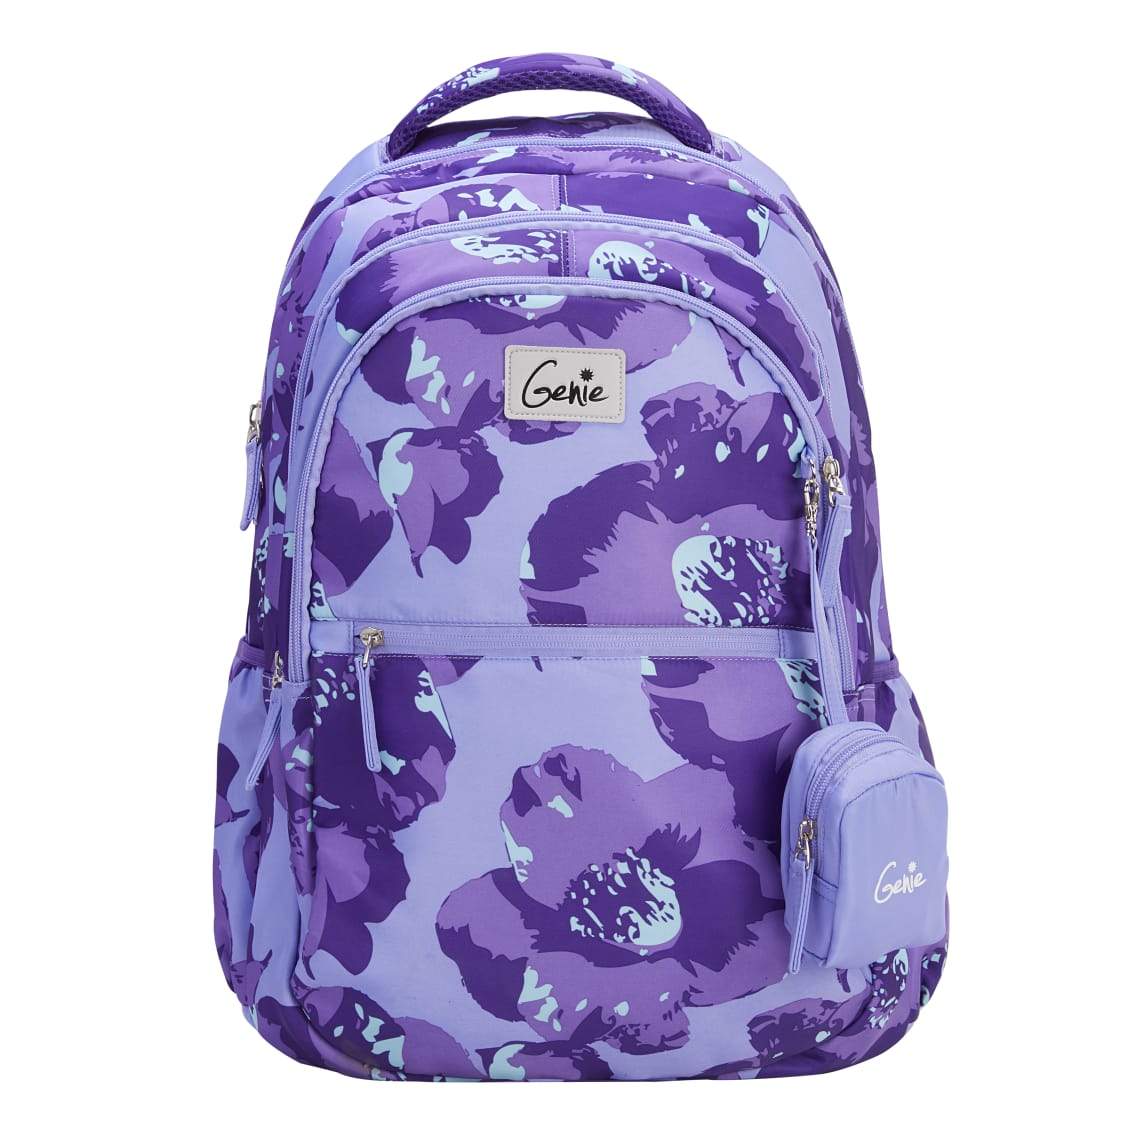 Genie 36 Ltrs Casual Backpack (Bloom)